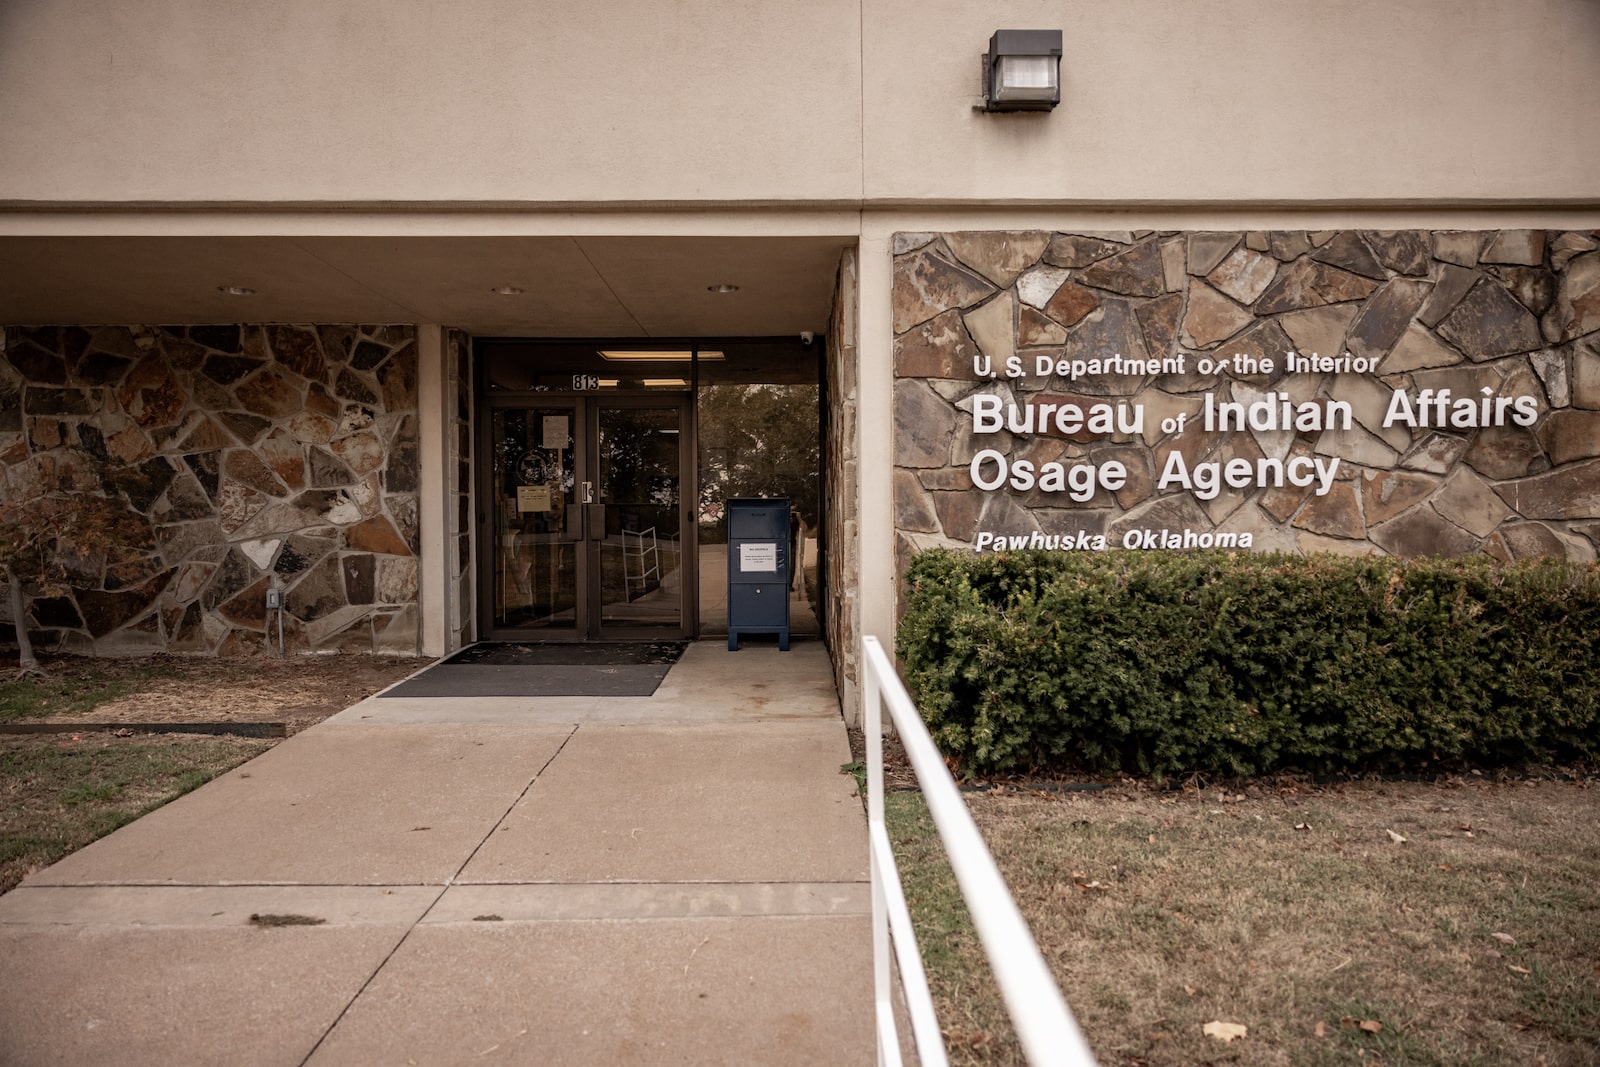 Bureau of Indian Affairs Osage Agency building in Pawhuska, Oklahoma.